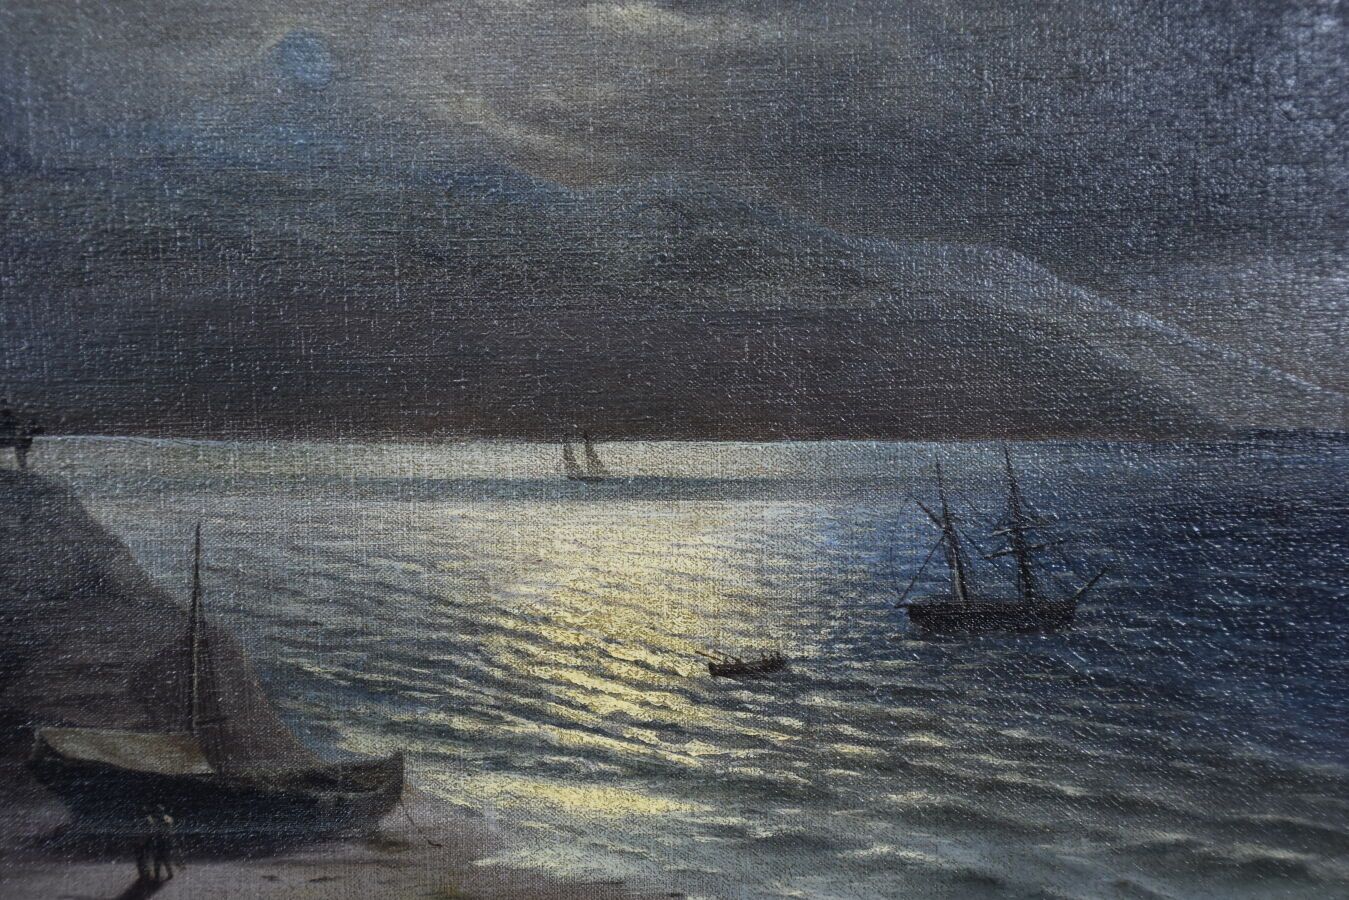 Null PLEVAKO V.

19世纪的乌克兰学校

黑海海岸

布面油画，左下角有签名

高度：30厘米30 ; 宽度 : 43 cm